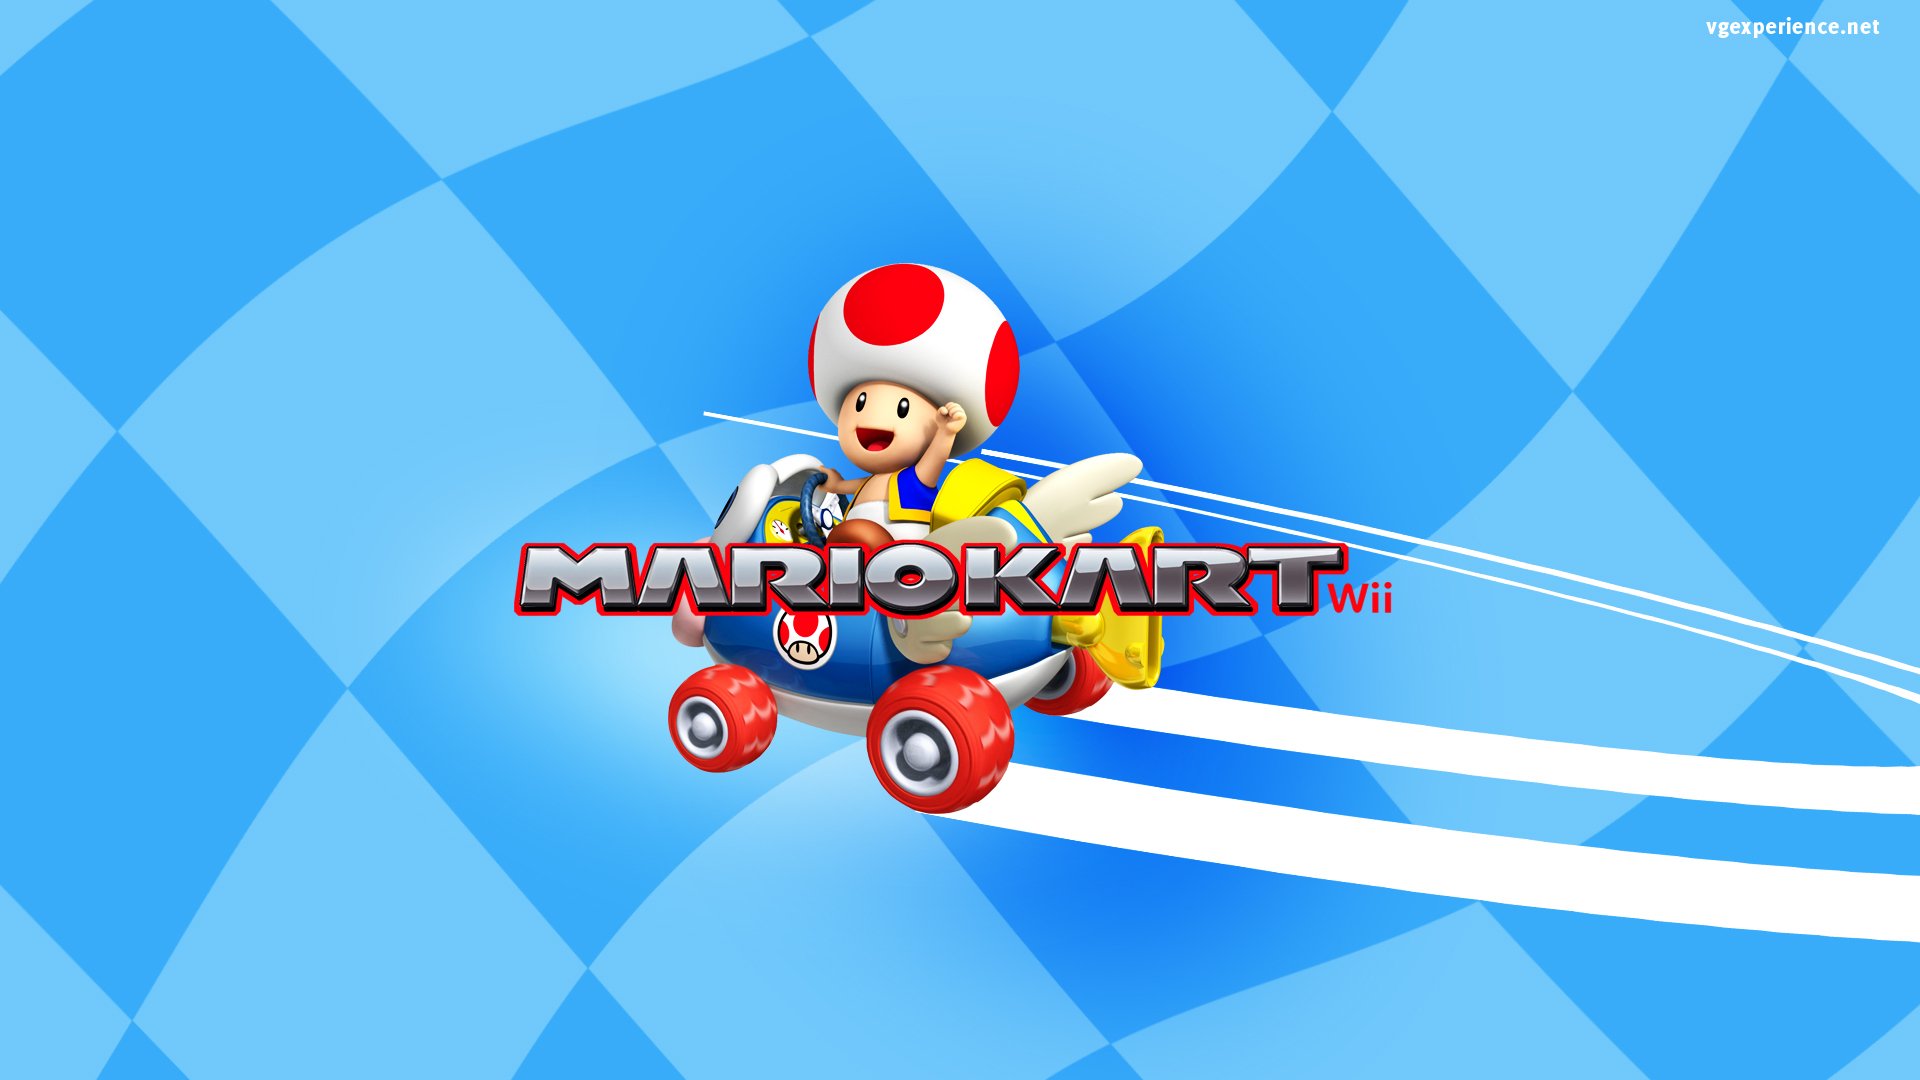 Mario Kart Wii Fond Décran Hd Arrière Plan 1920x1080 Id666846 Wallpaper Abyss 6082